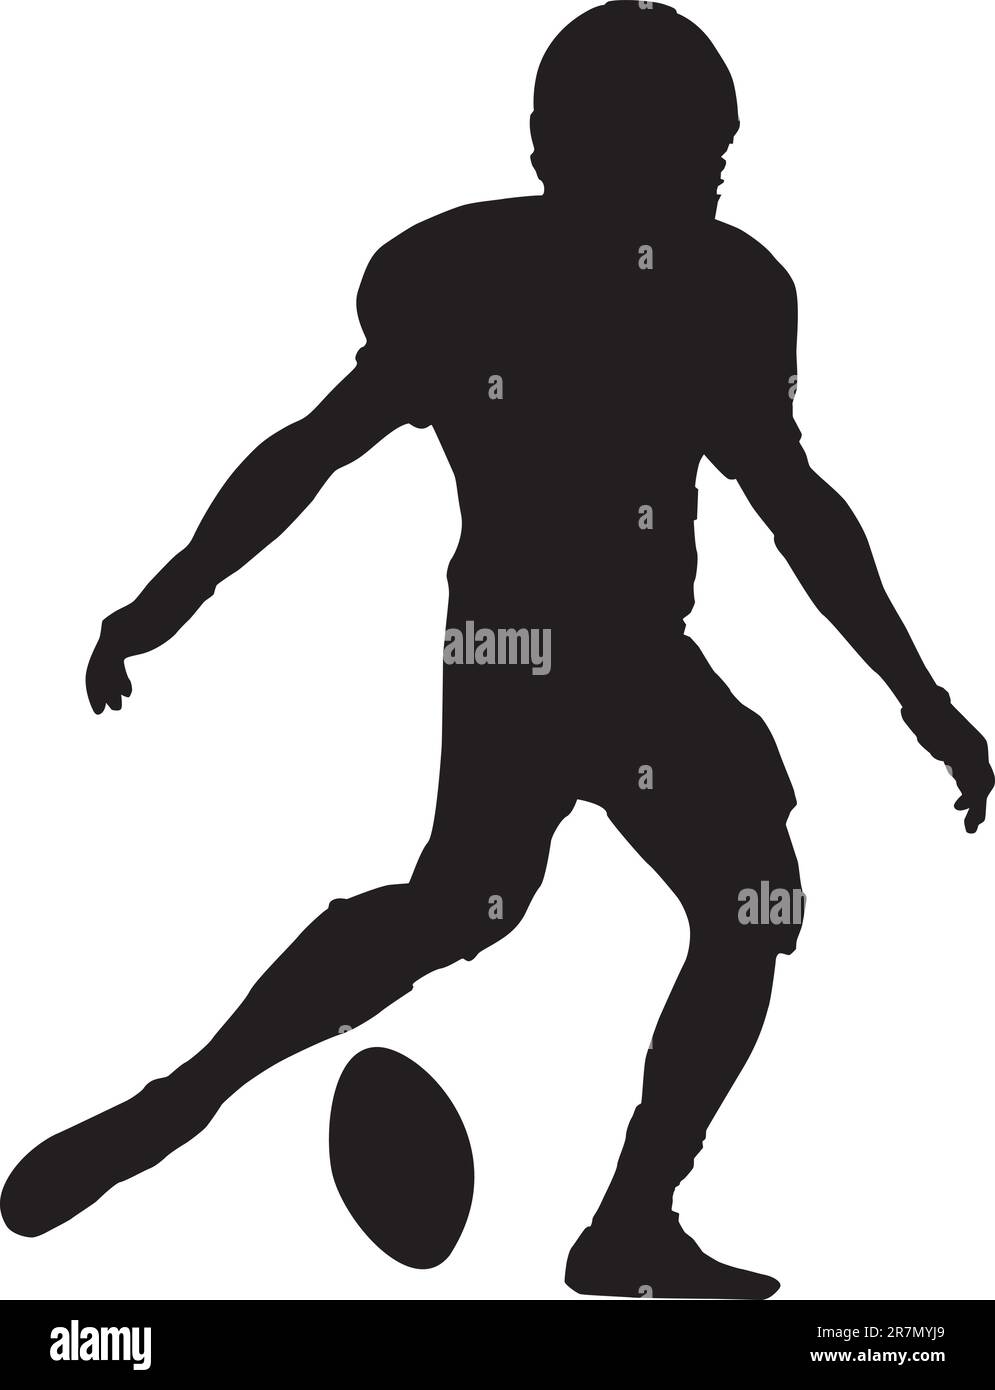 vector of an american football player kicking off the ball Stock Vector